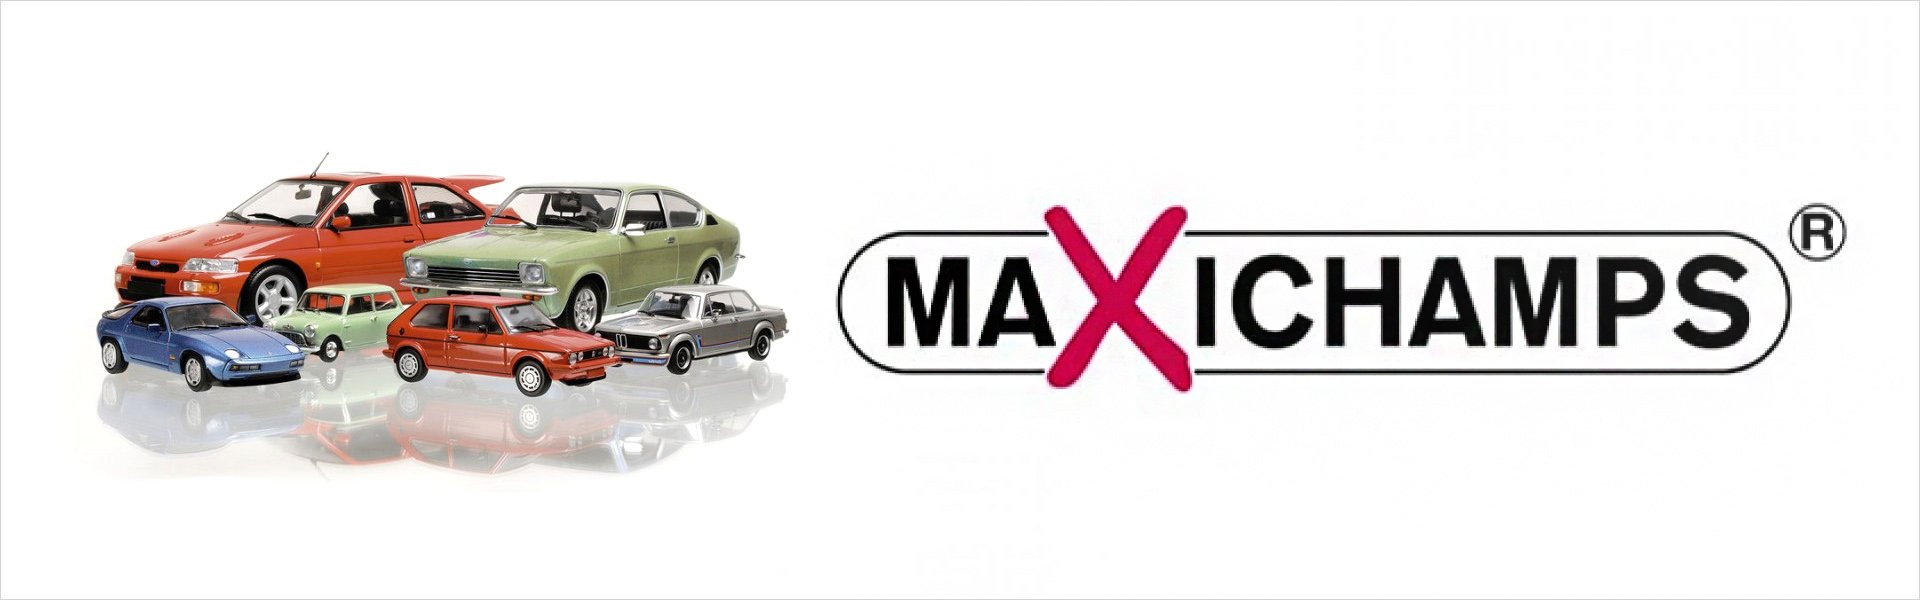 AUDI A6 - 1997 - RED MAXICHAMPS 1:43 940017100 Maxichamps